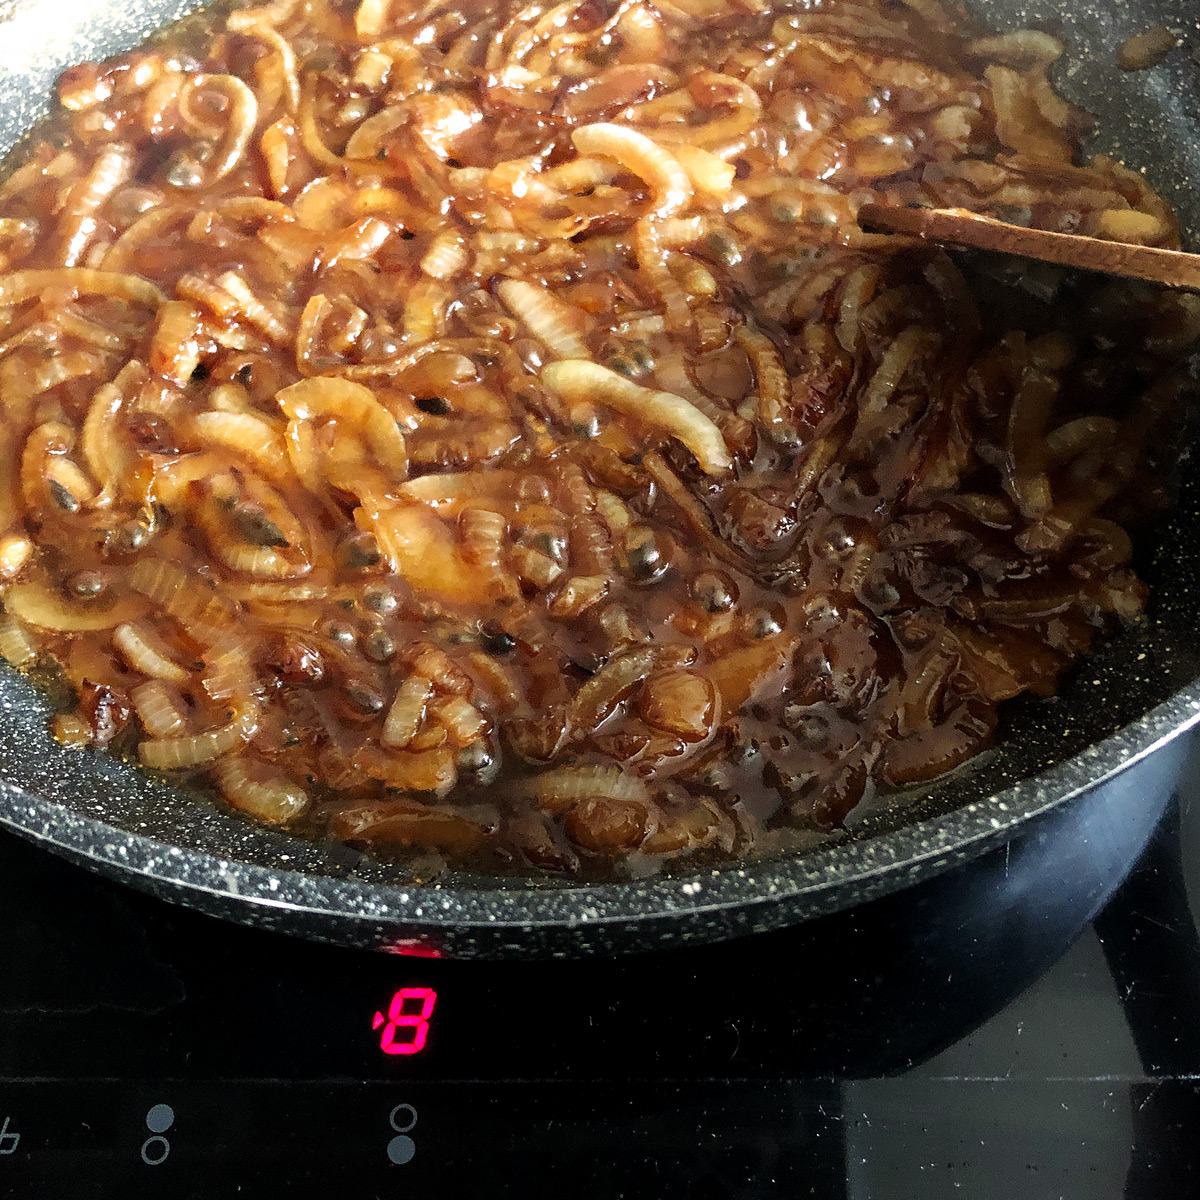 Reducing the onion gravy over high heat.